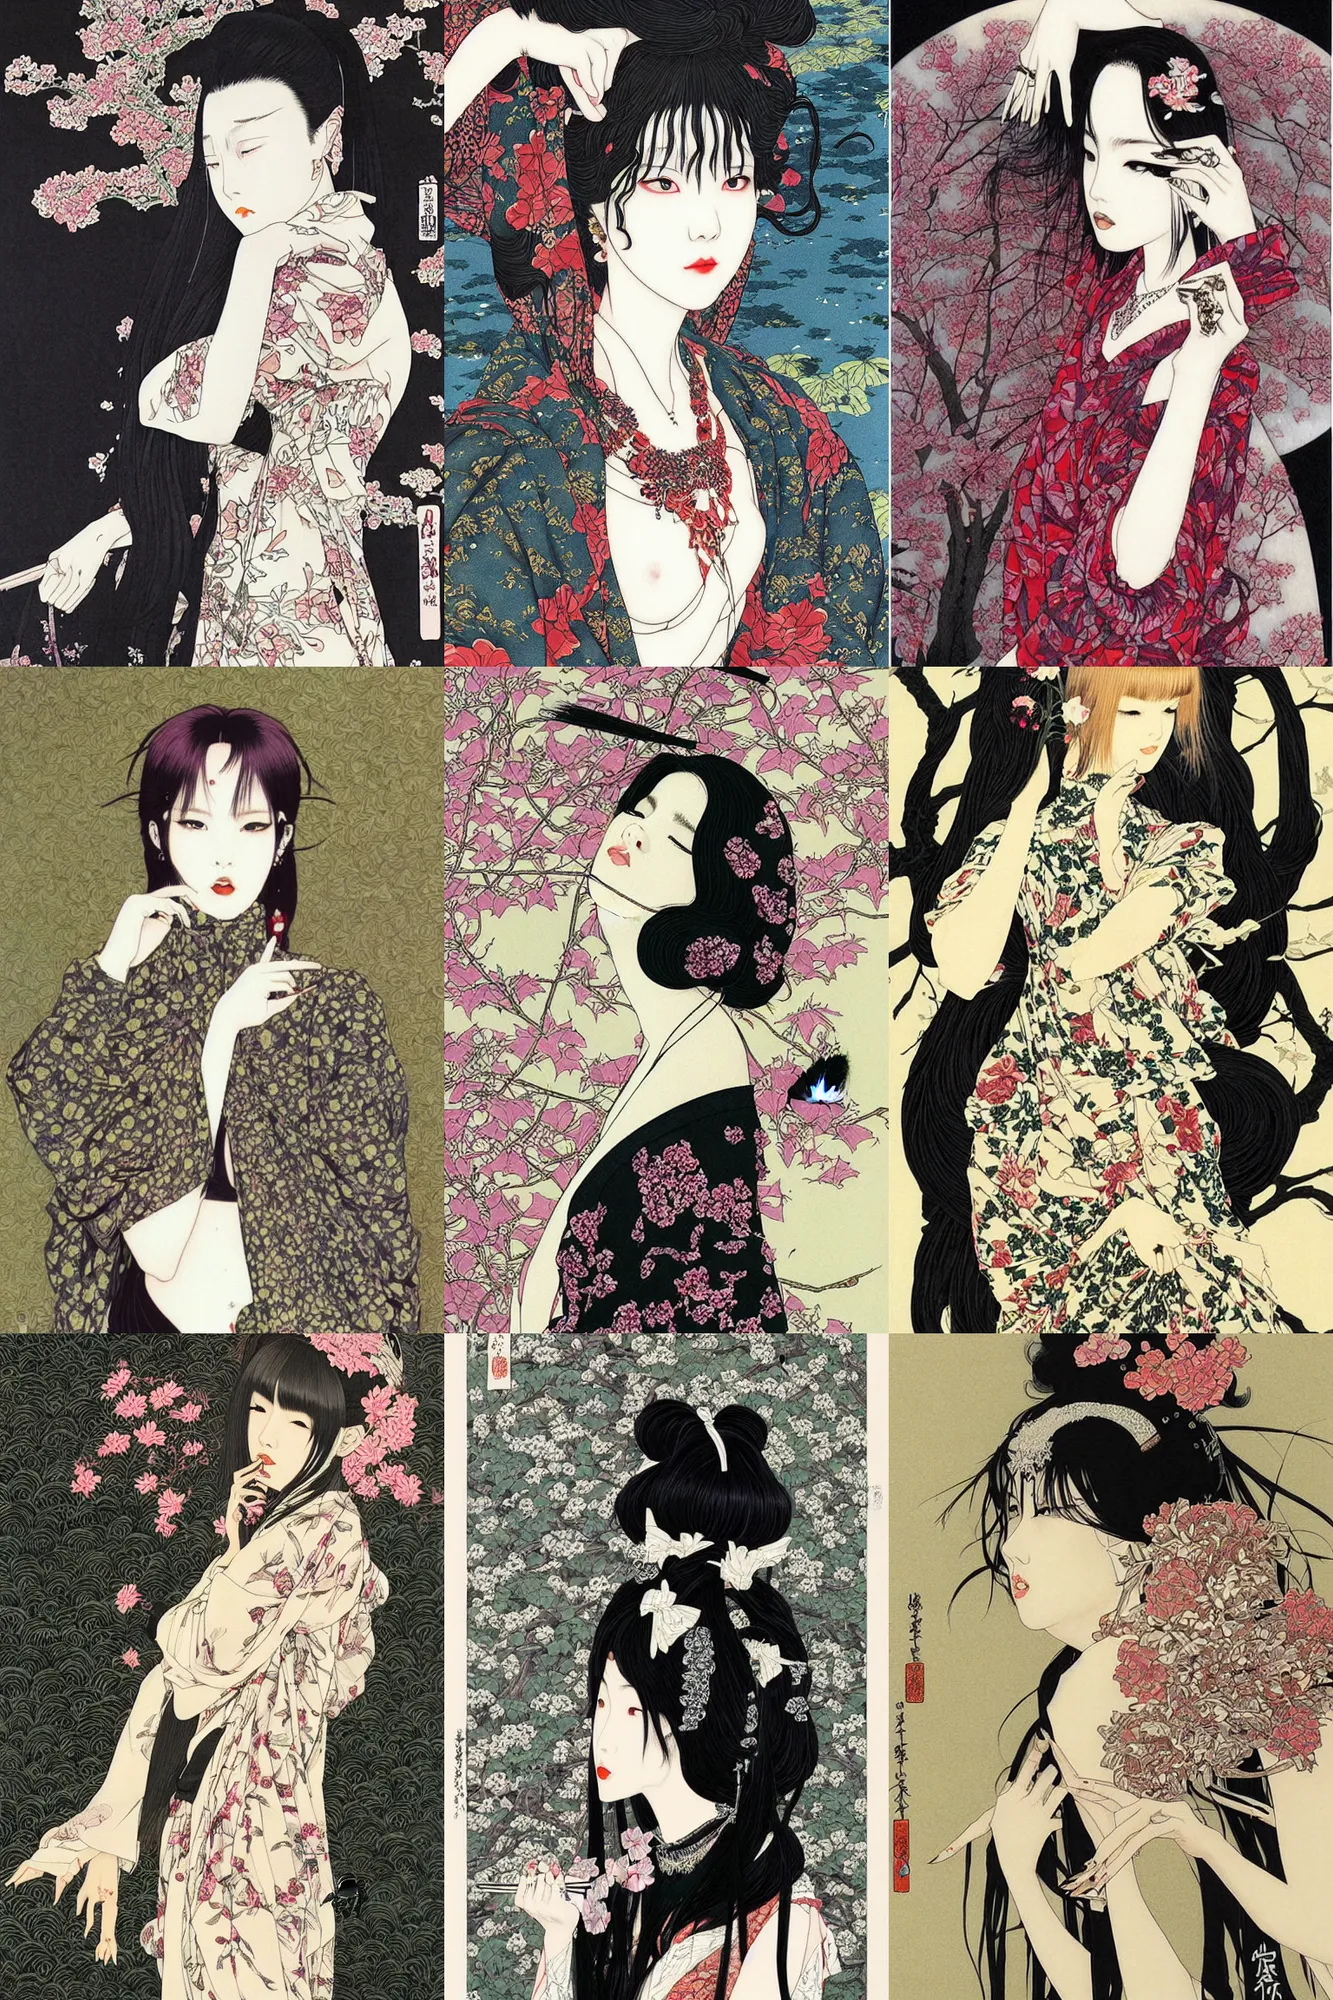 Prompt: very coherent, lisa blackpink, a ultradetailed beautiful painting of a stylish woman, art by takato yamamoto